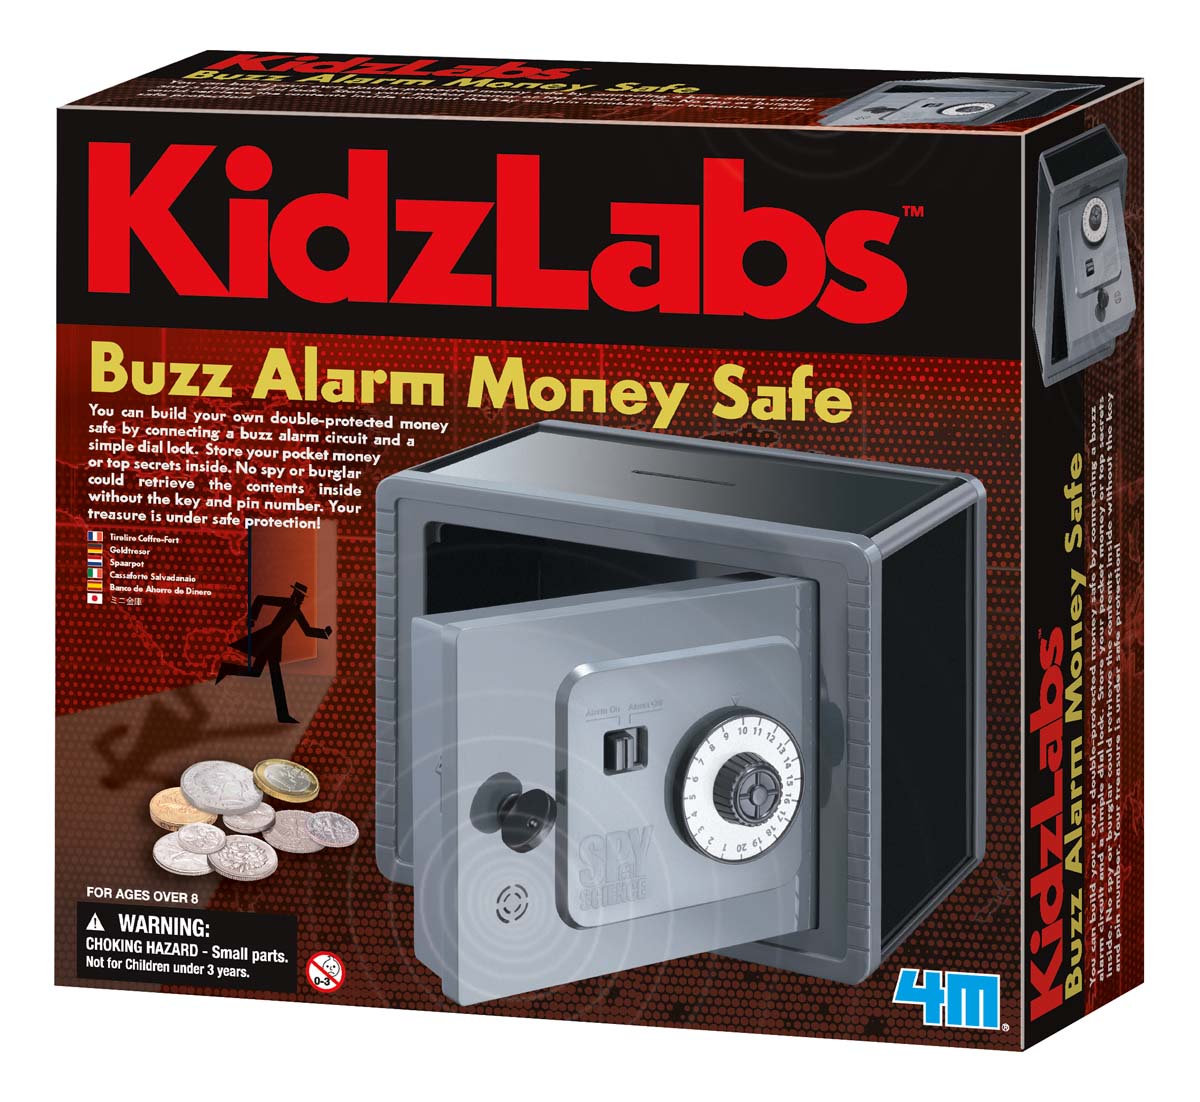 4M-Kidz Labs Buzz Alarm Money Safe